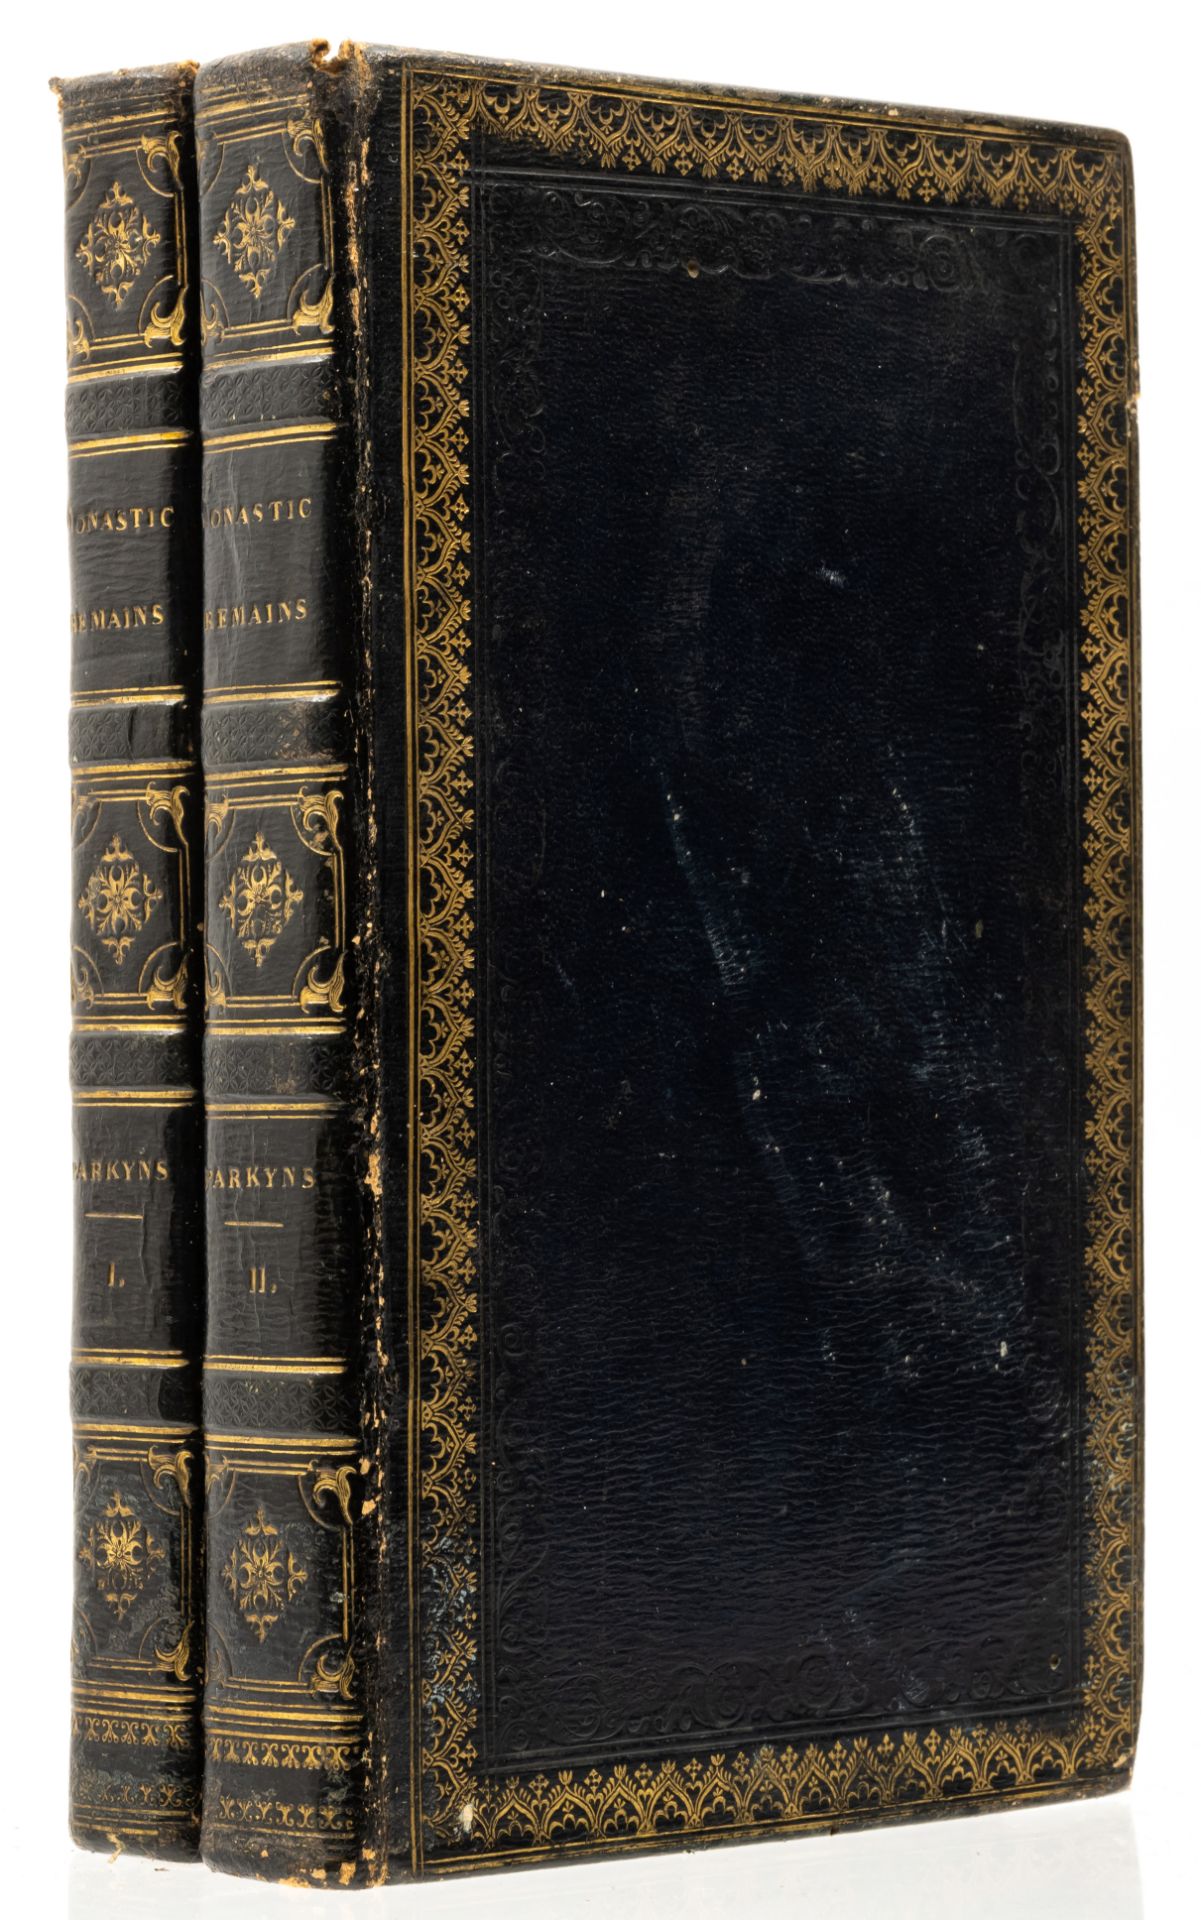 Britain.- Parkyns (G. J.) Monastic and Baronial Remains, 2 vol., 1816.